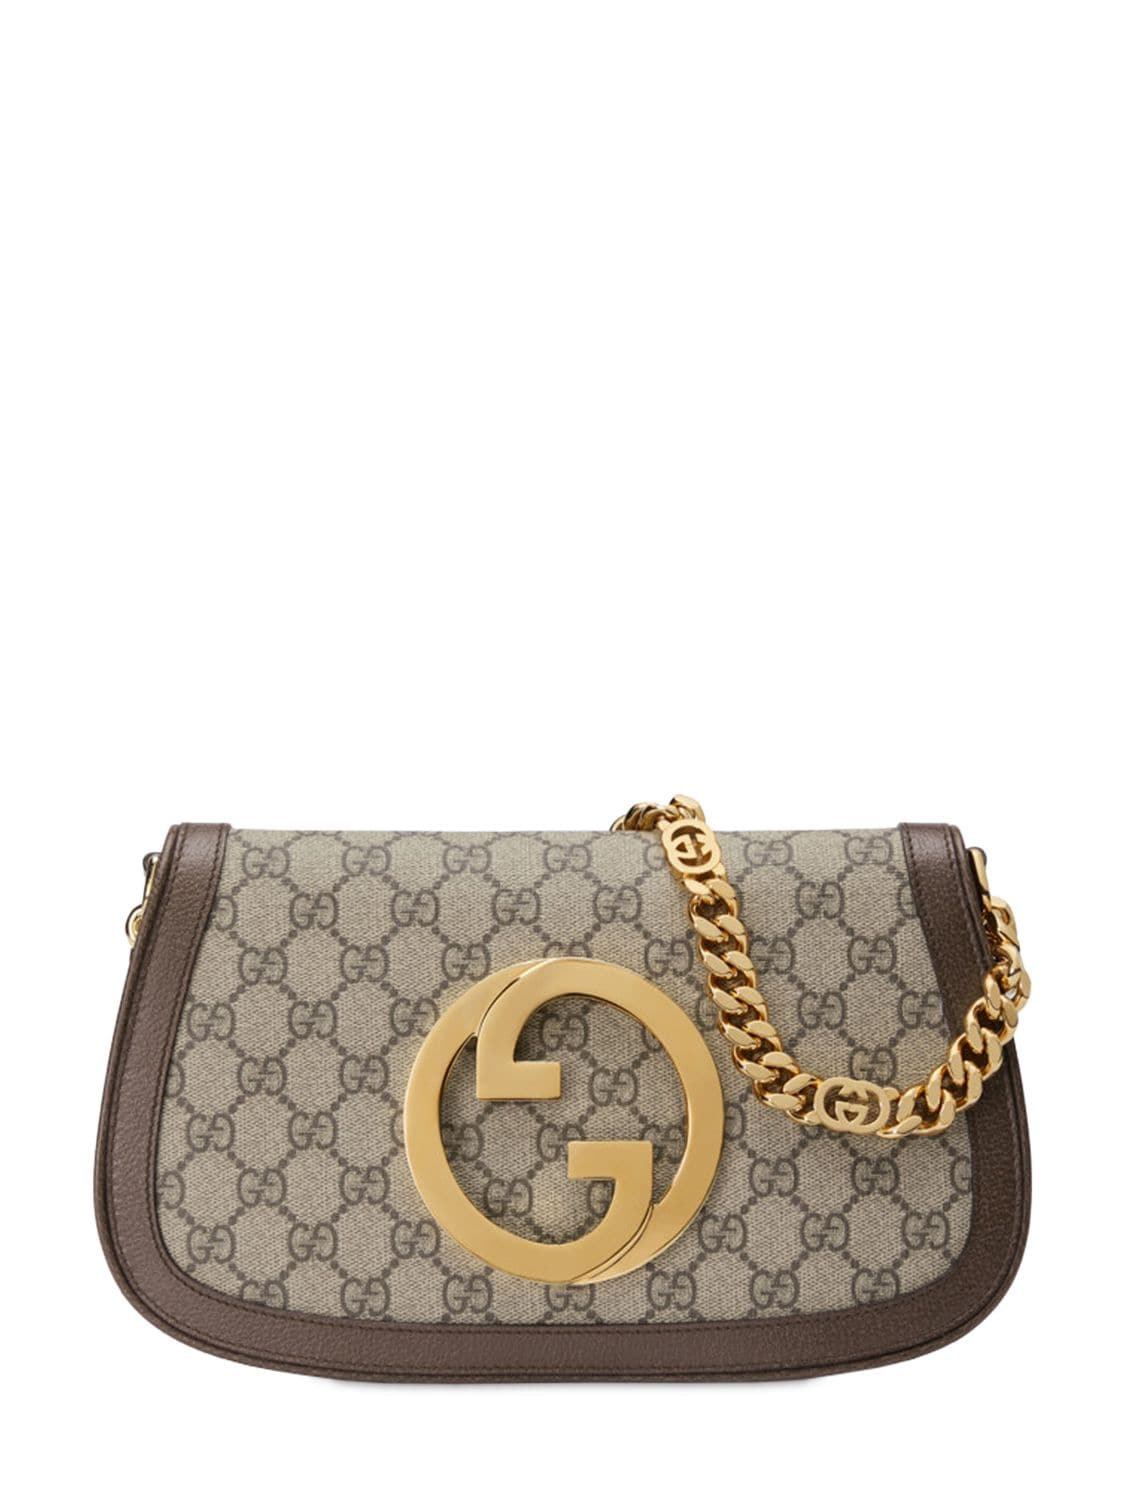 Gucci Blondie Gg Supreme Shoulder Bag In Beige Ebony